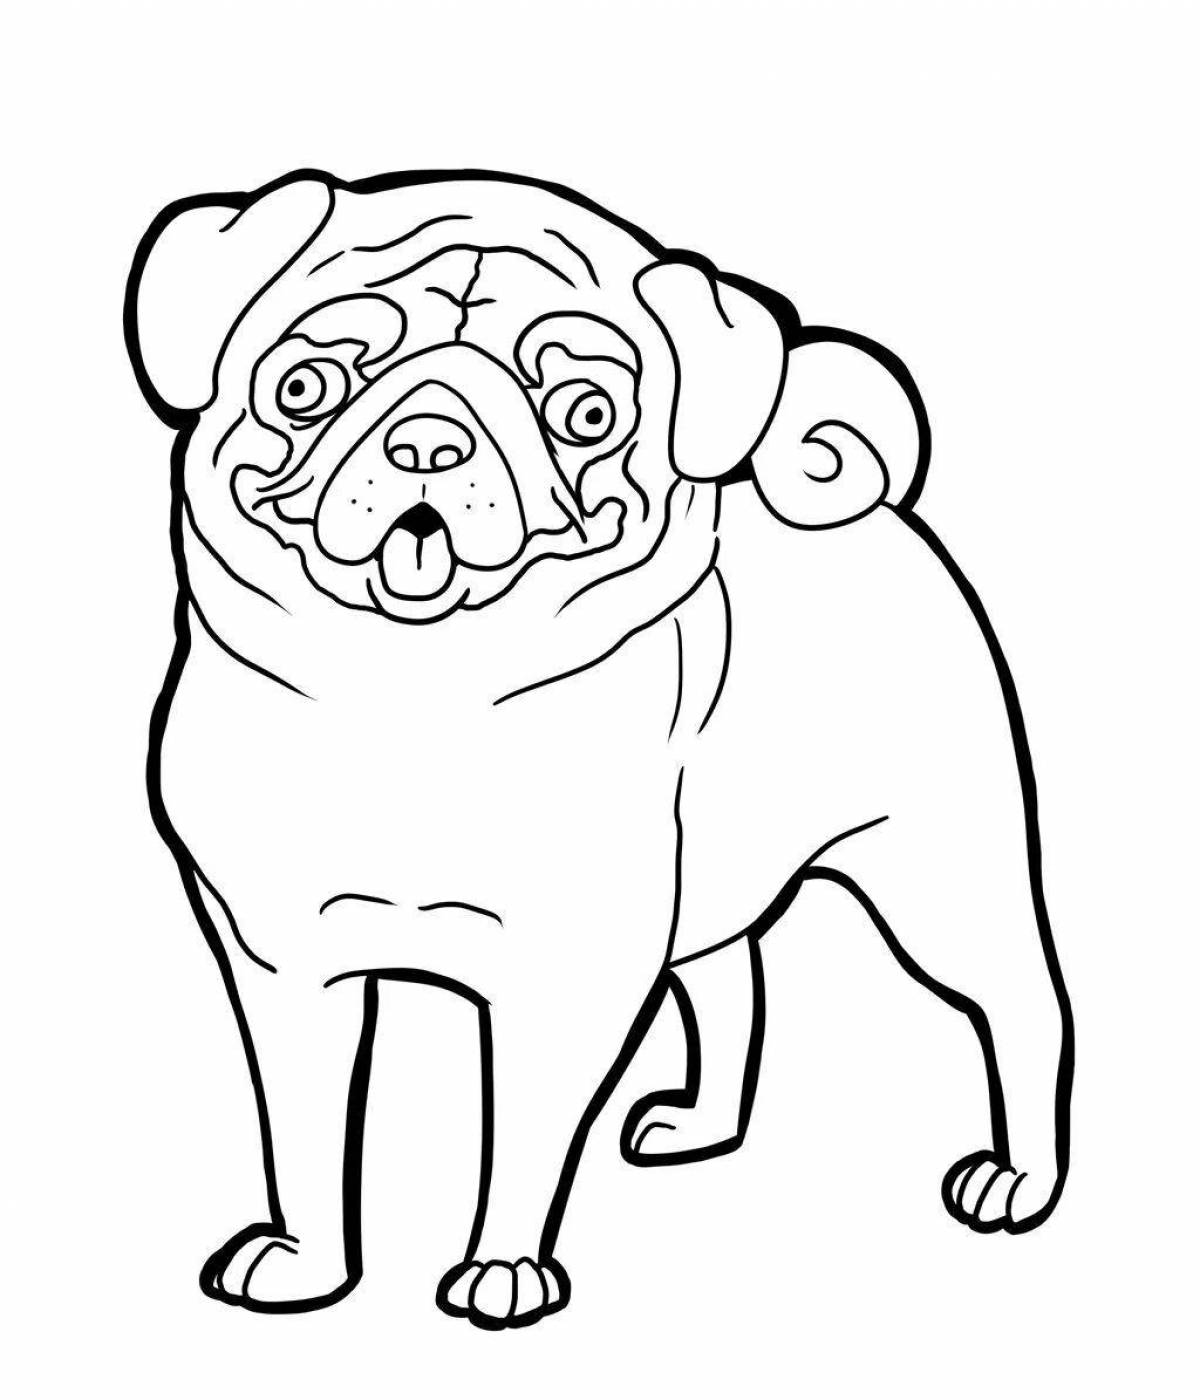 Animated pj pug coloring page